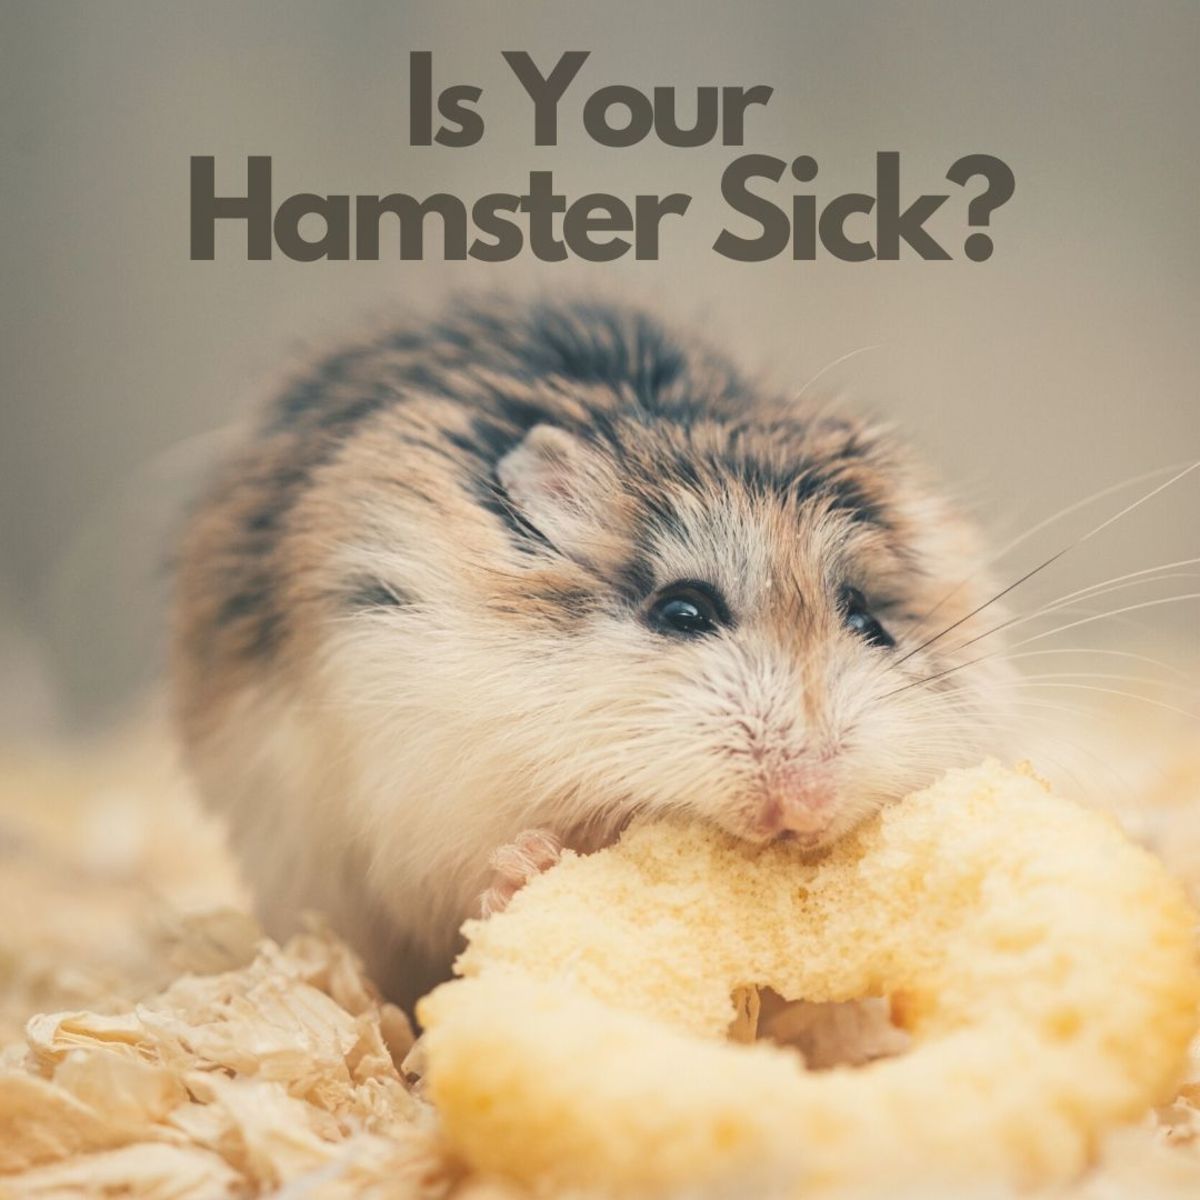 How to handle allergies in hamsters